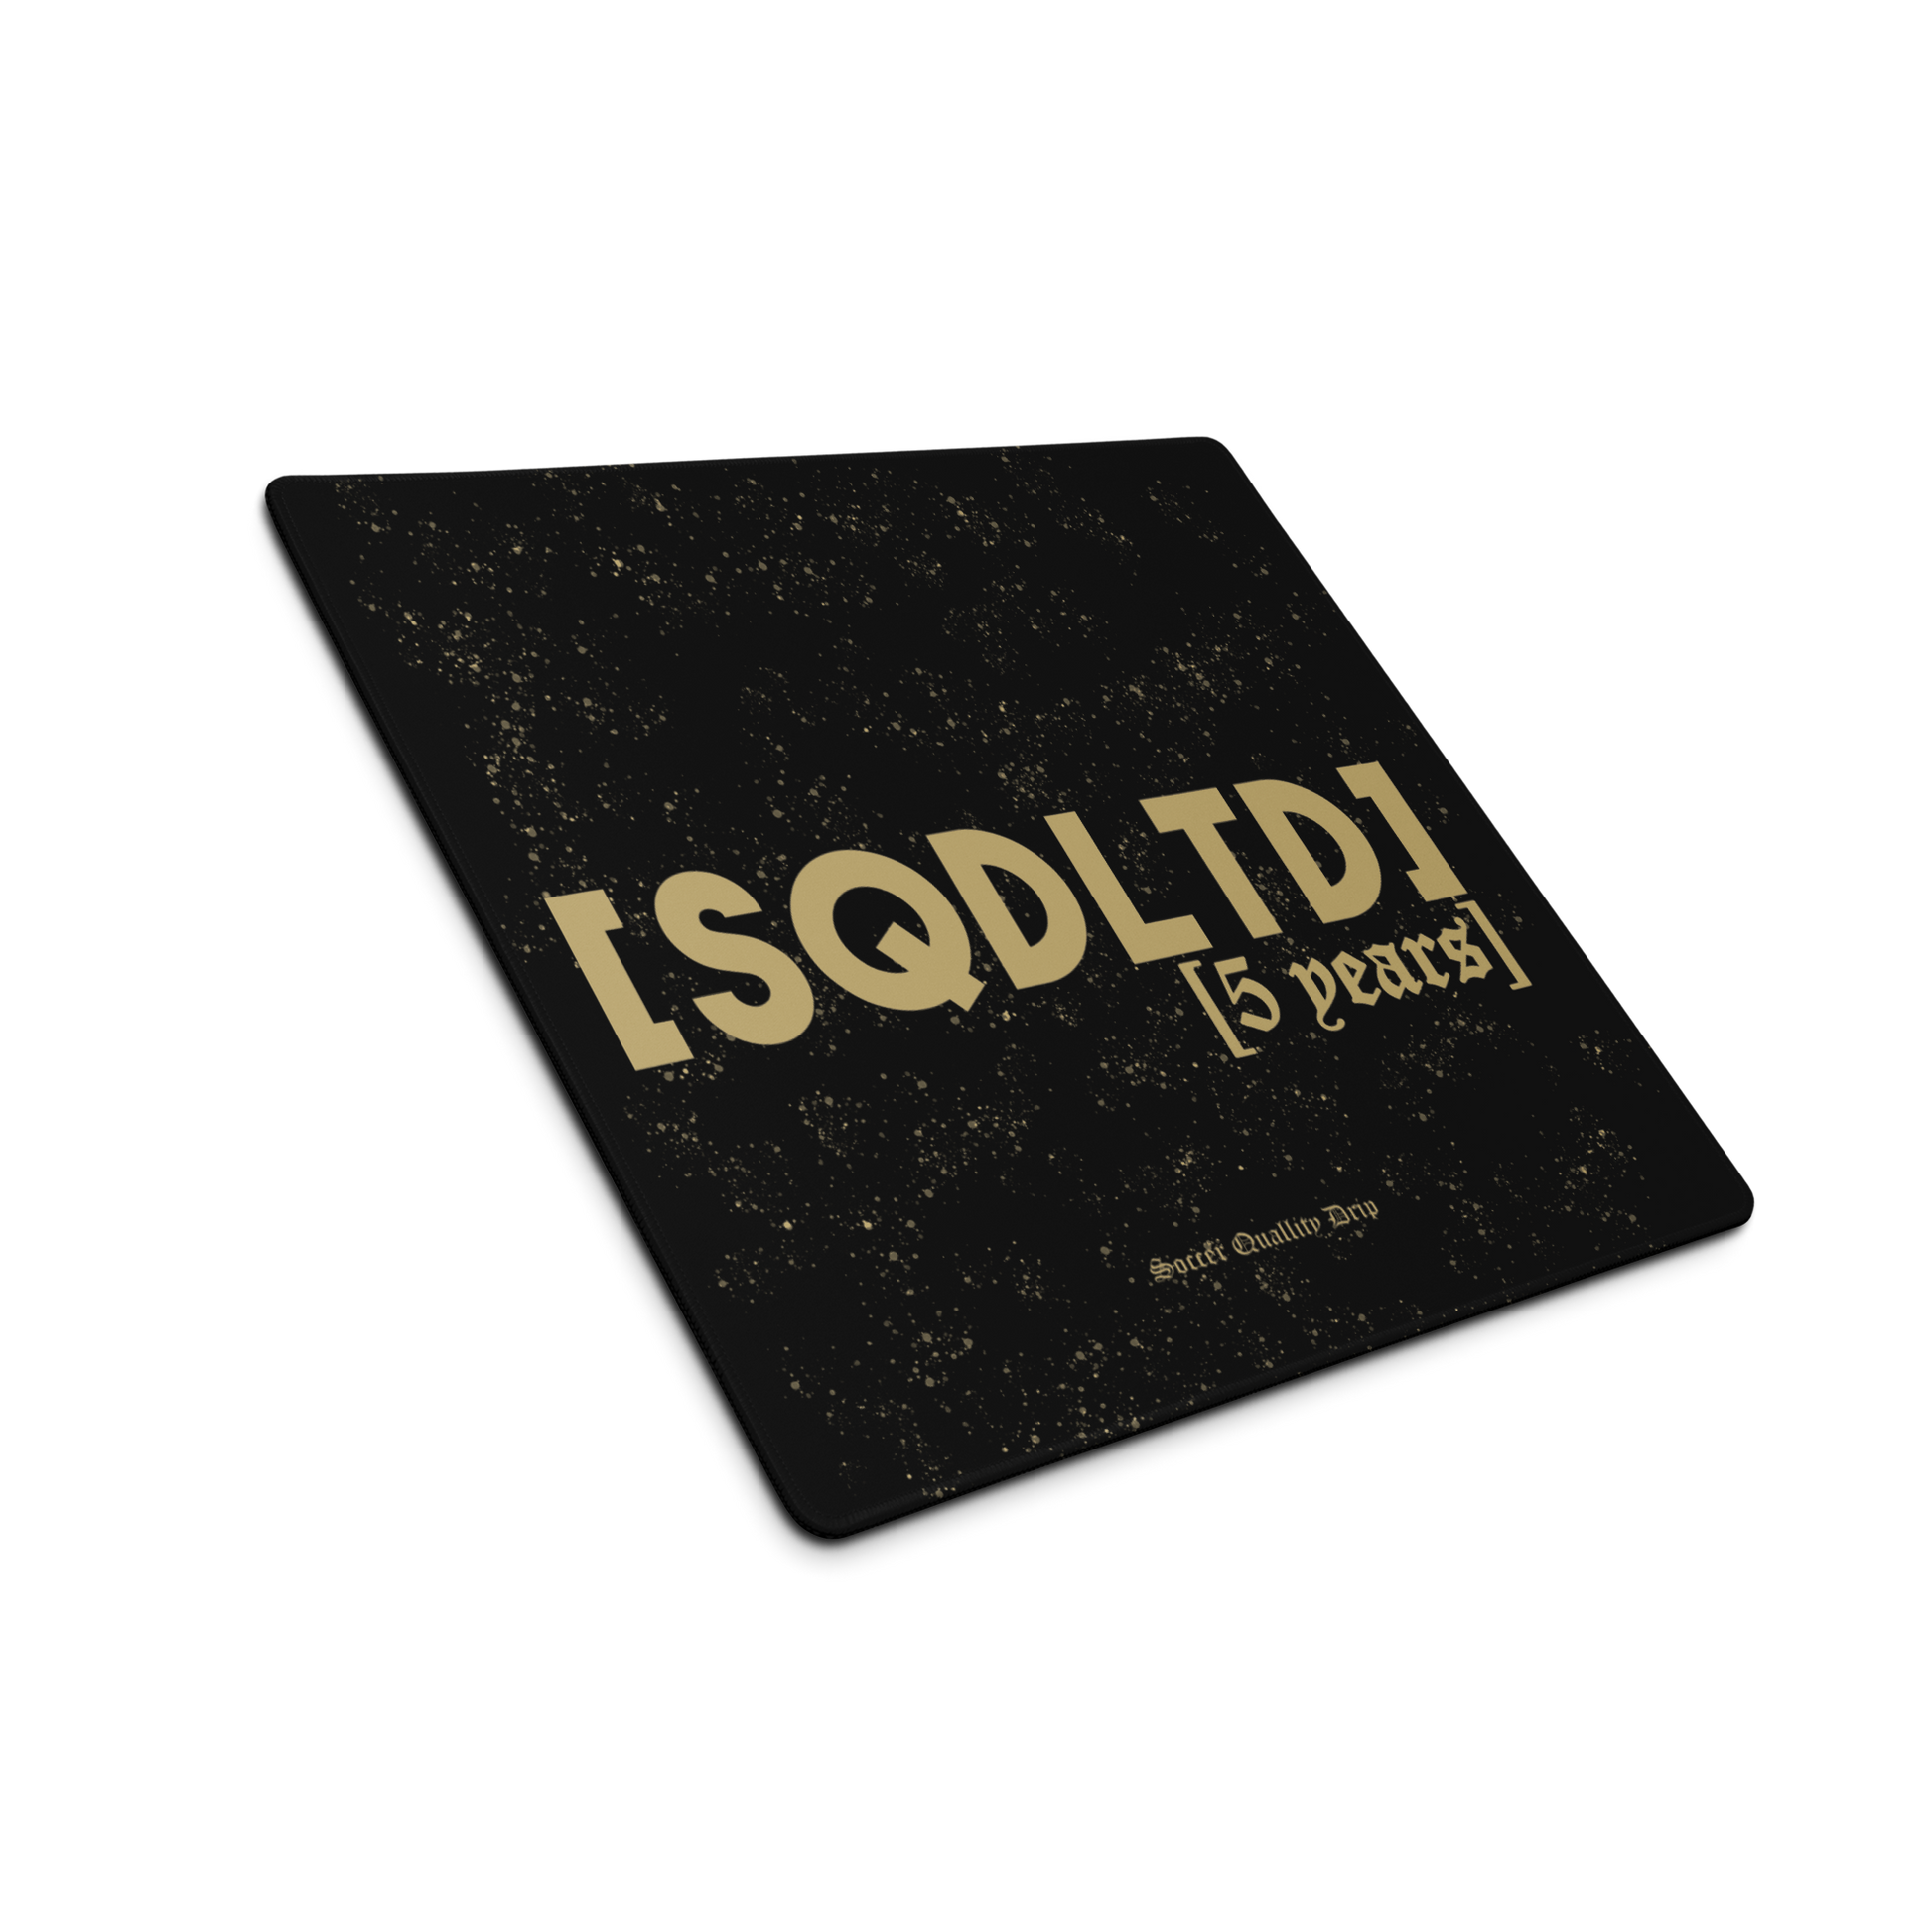 Sqdltd 5-Years SQD Gaming mouse pad